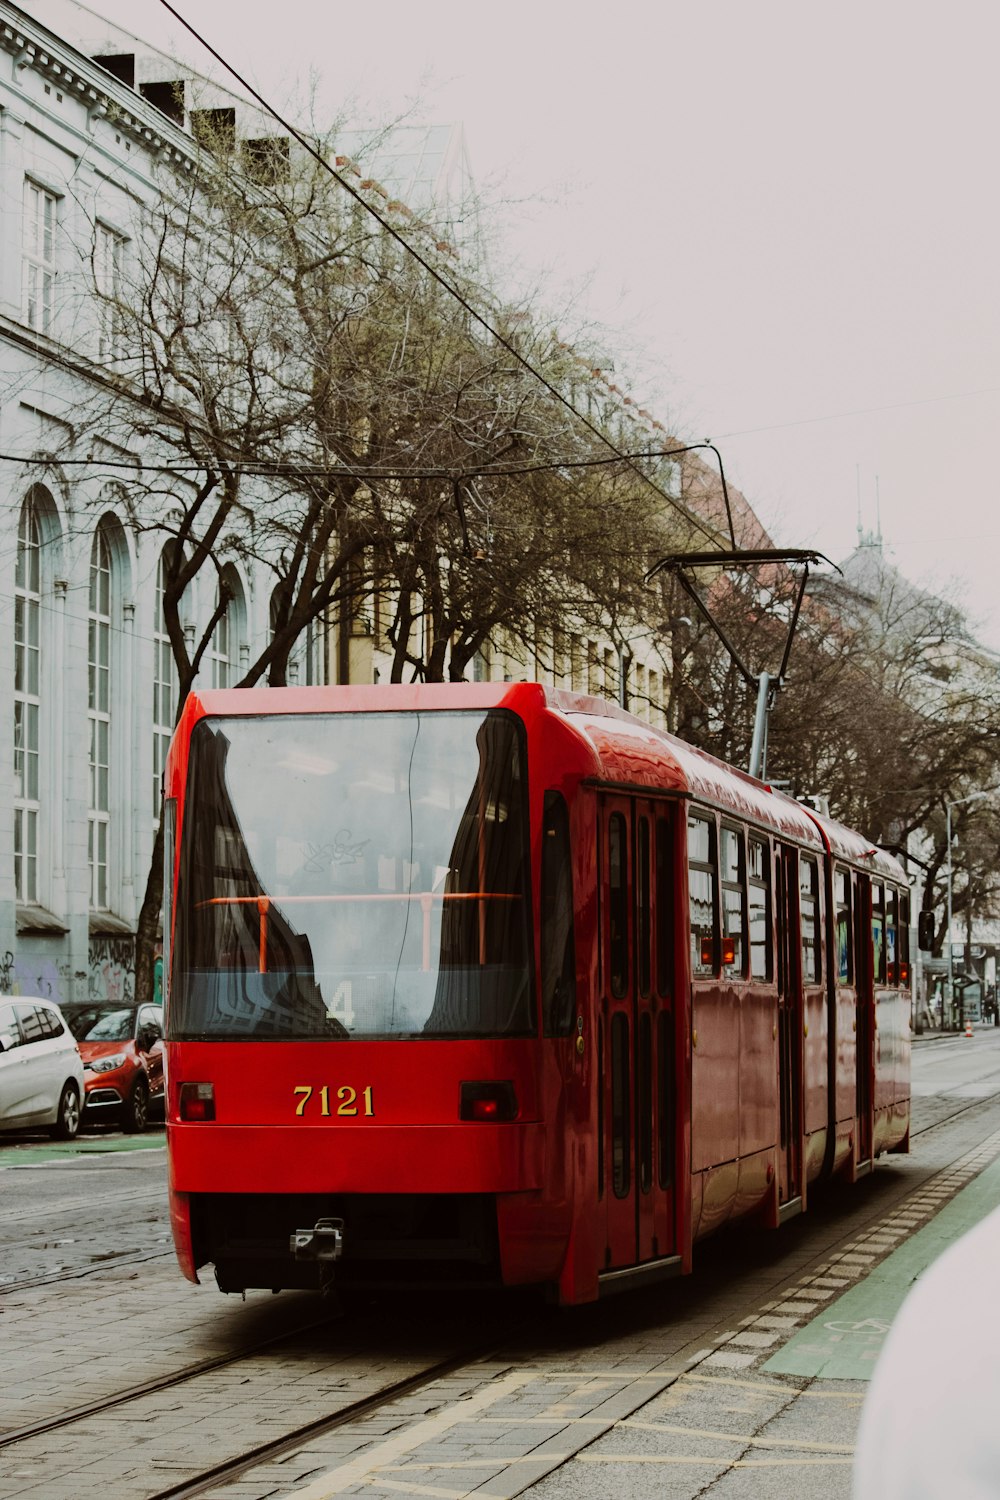 a red trolley car on a city street